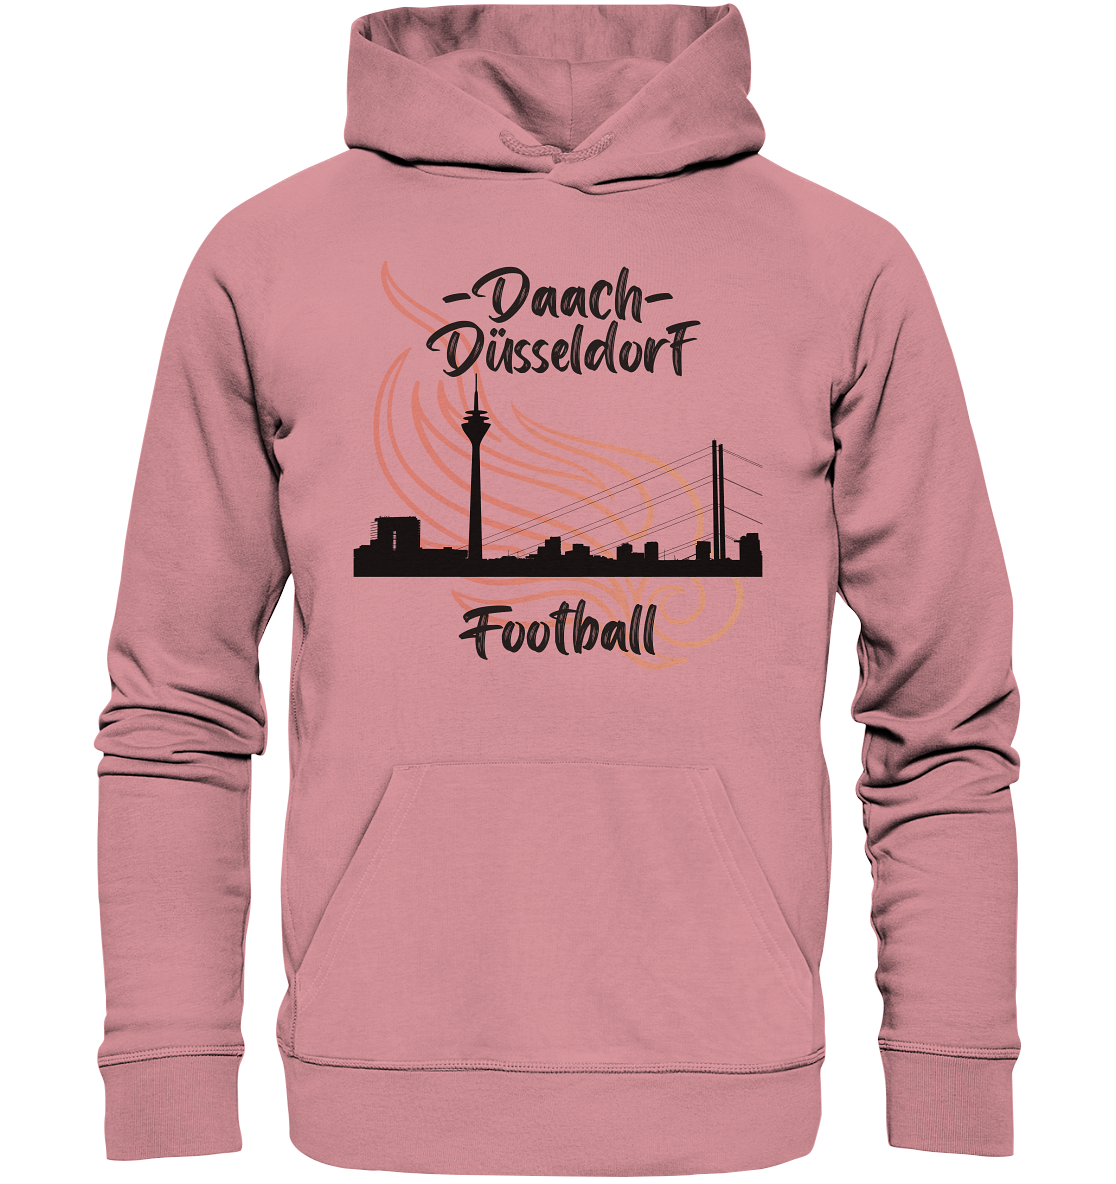 Daach - Düsseldorf Football - Organic Basic Hoodie - Football Unity Football Unity